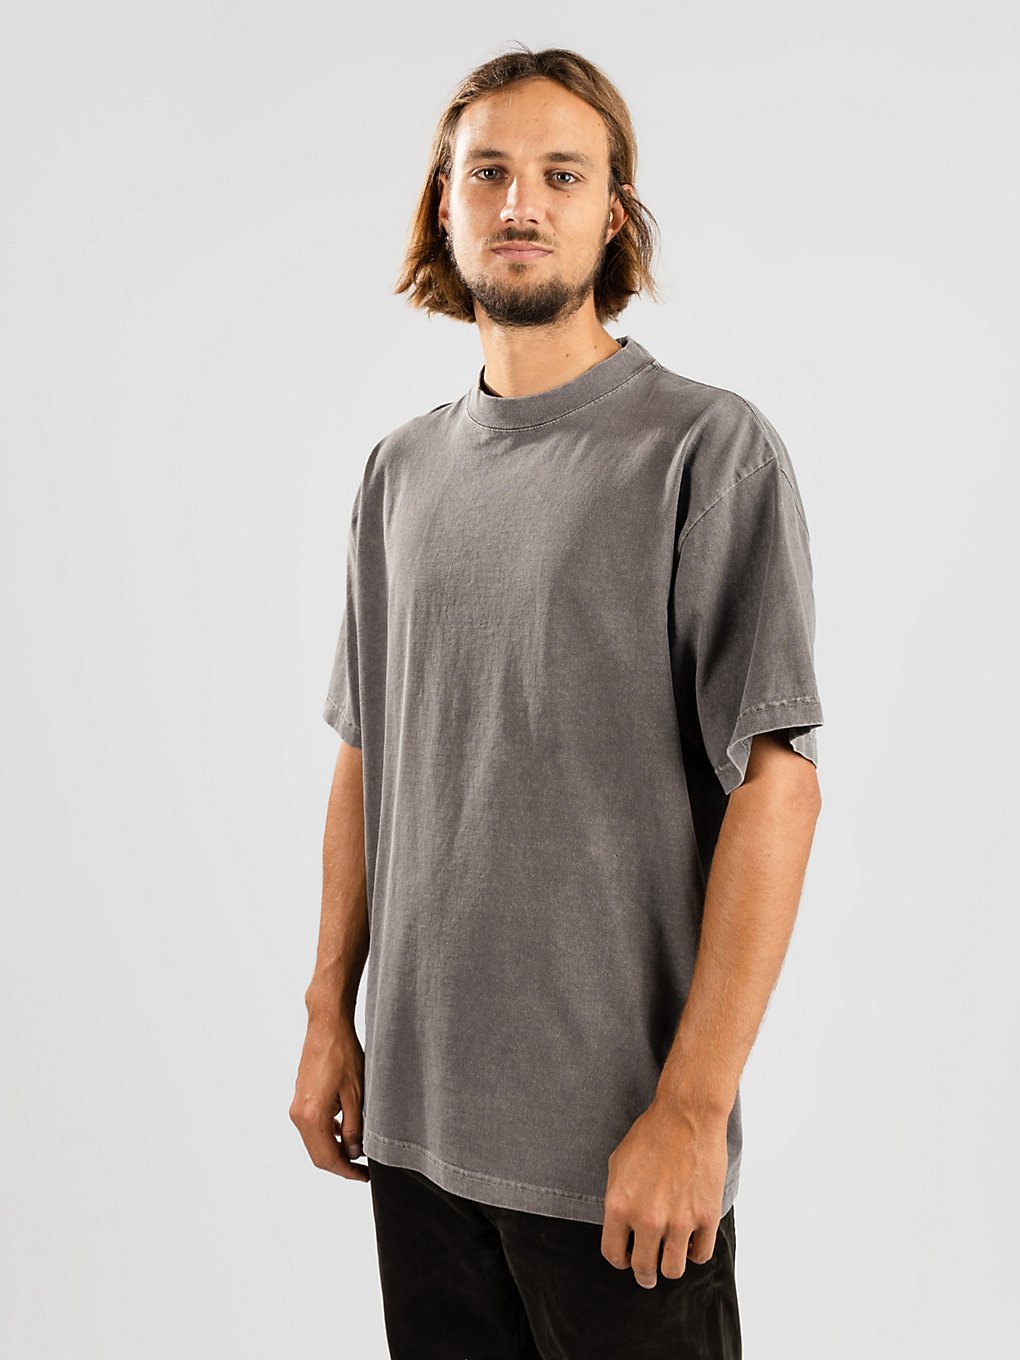 Shaka Wear 7.5 Max Heavyweight Garment Dye T-Shirt cement gray kaufen